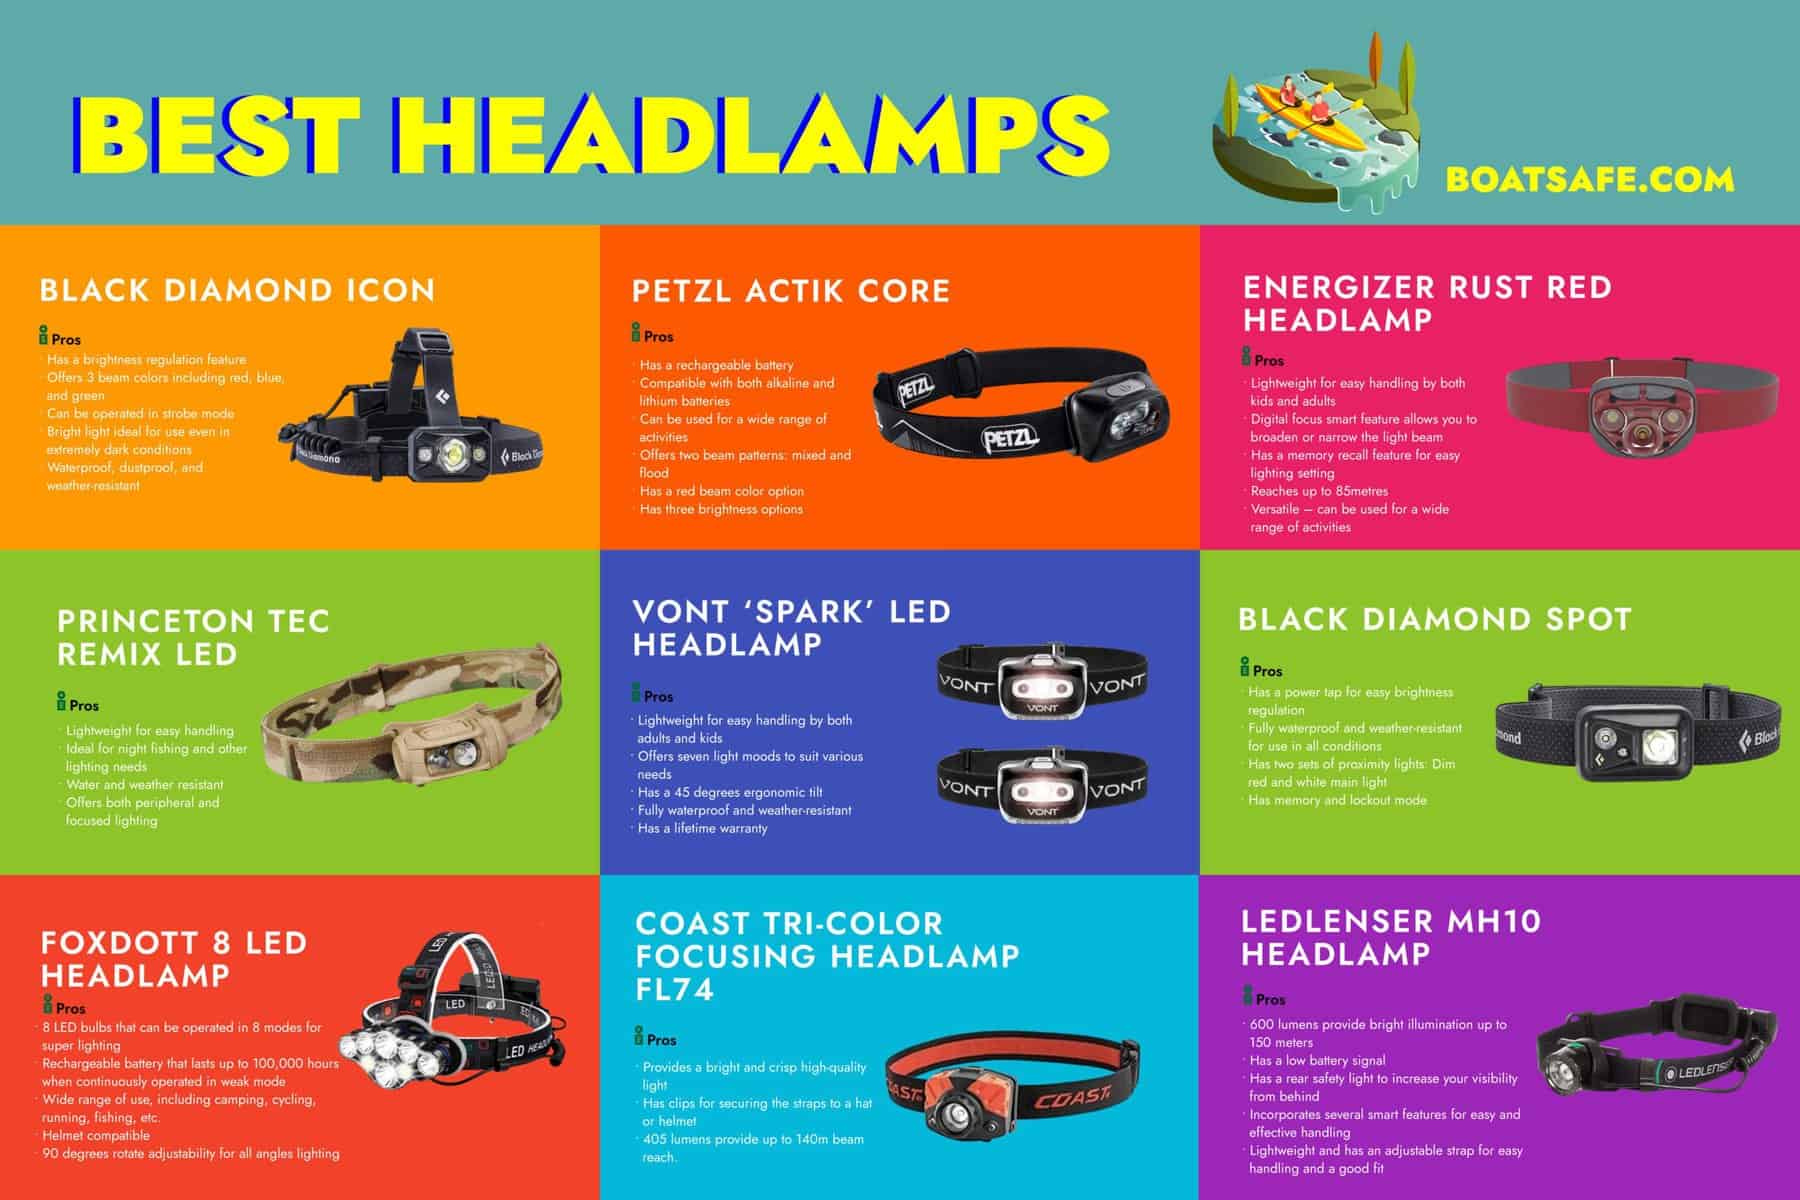 SXZ 2021 Wide Beam LED Headlamps, Lightweight, Weatherproof, 40 high Light LED Lights, Camping, Running, Hiking, Reading and Outdoor Headlamps 